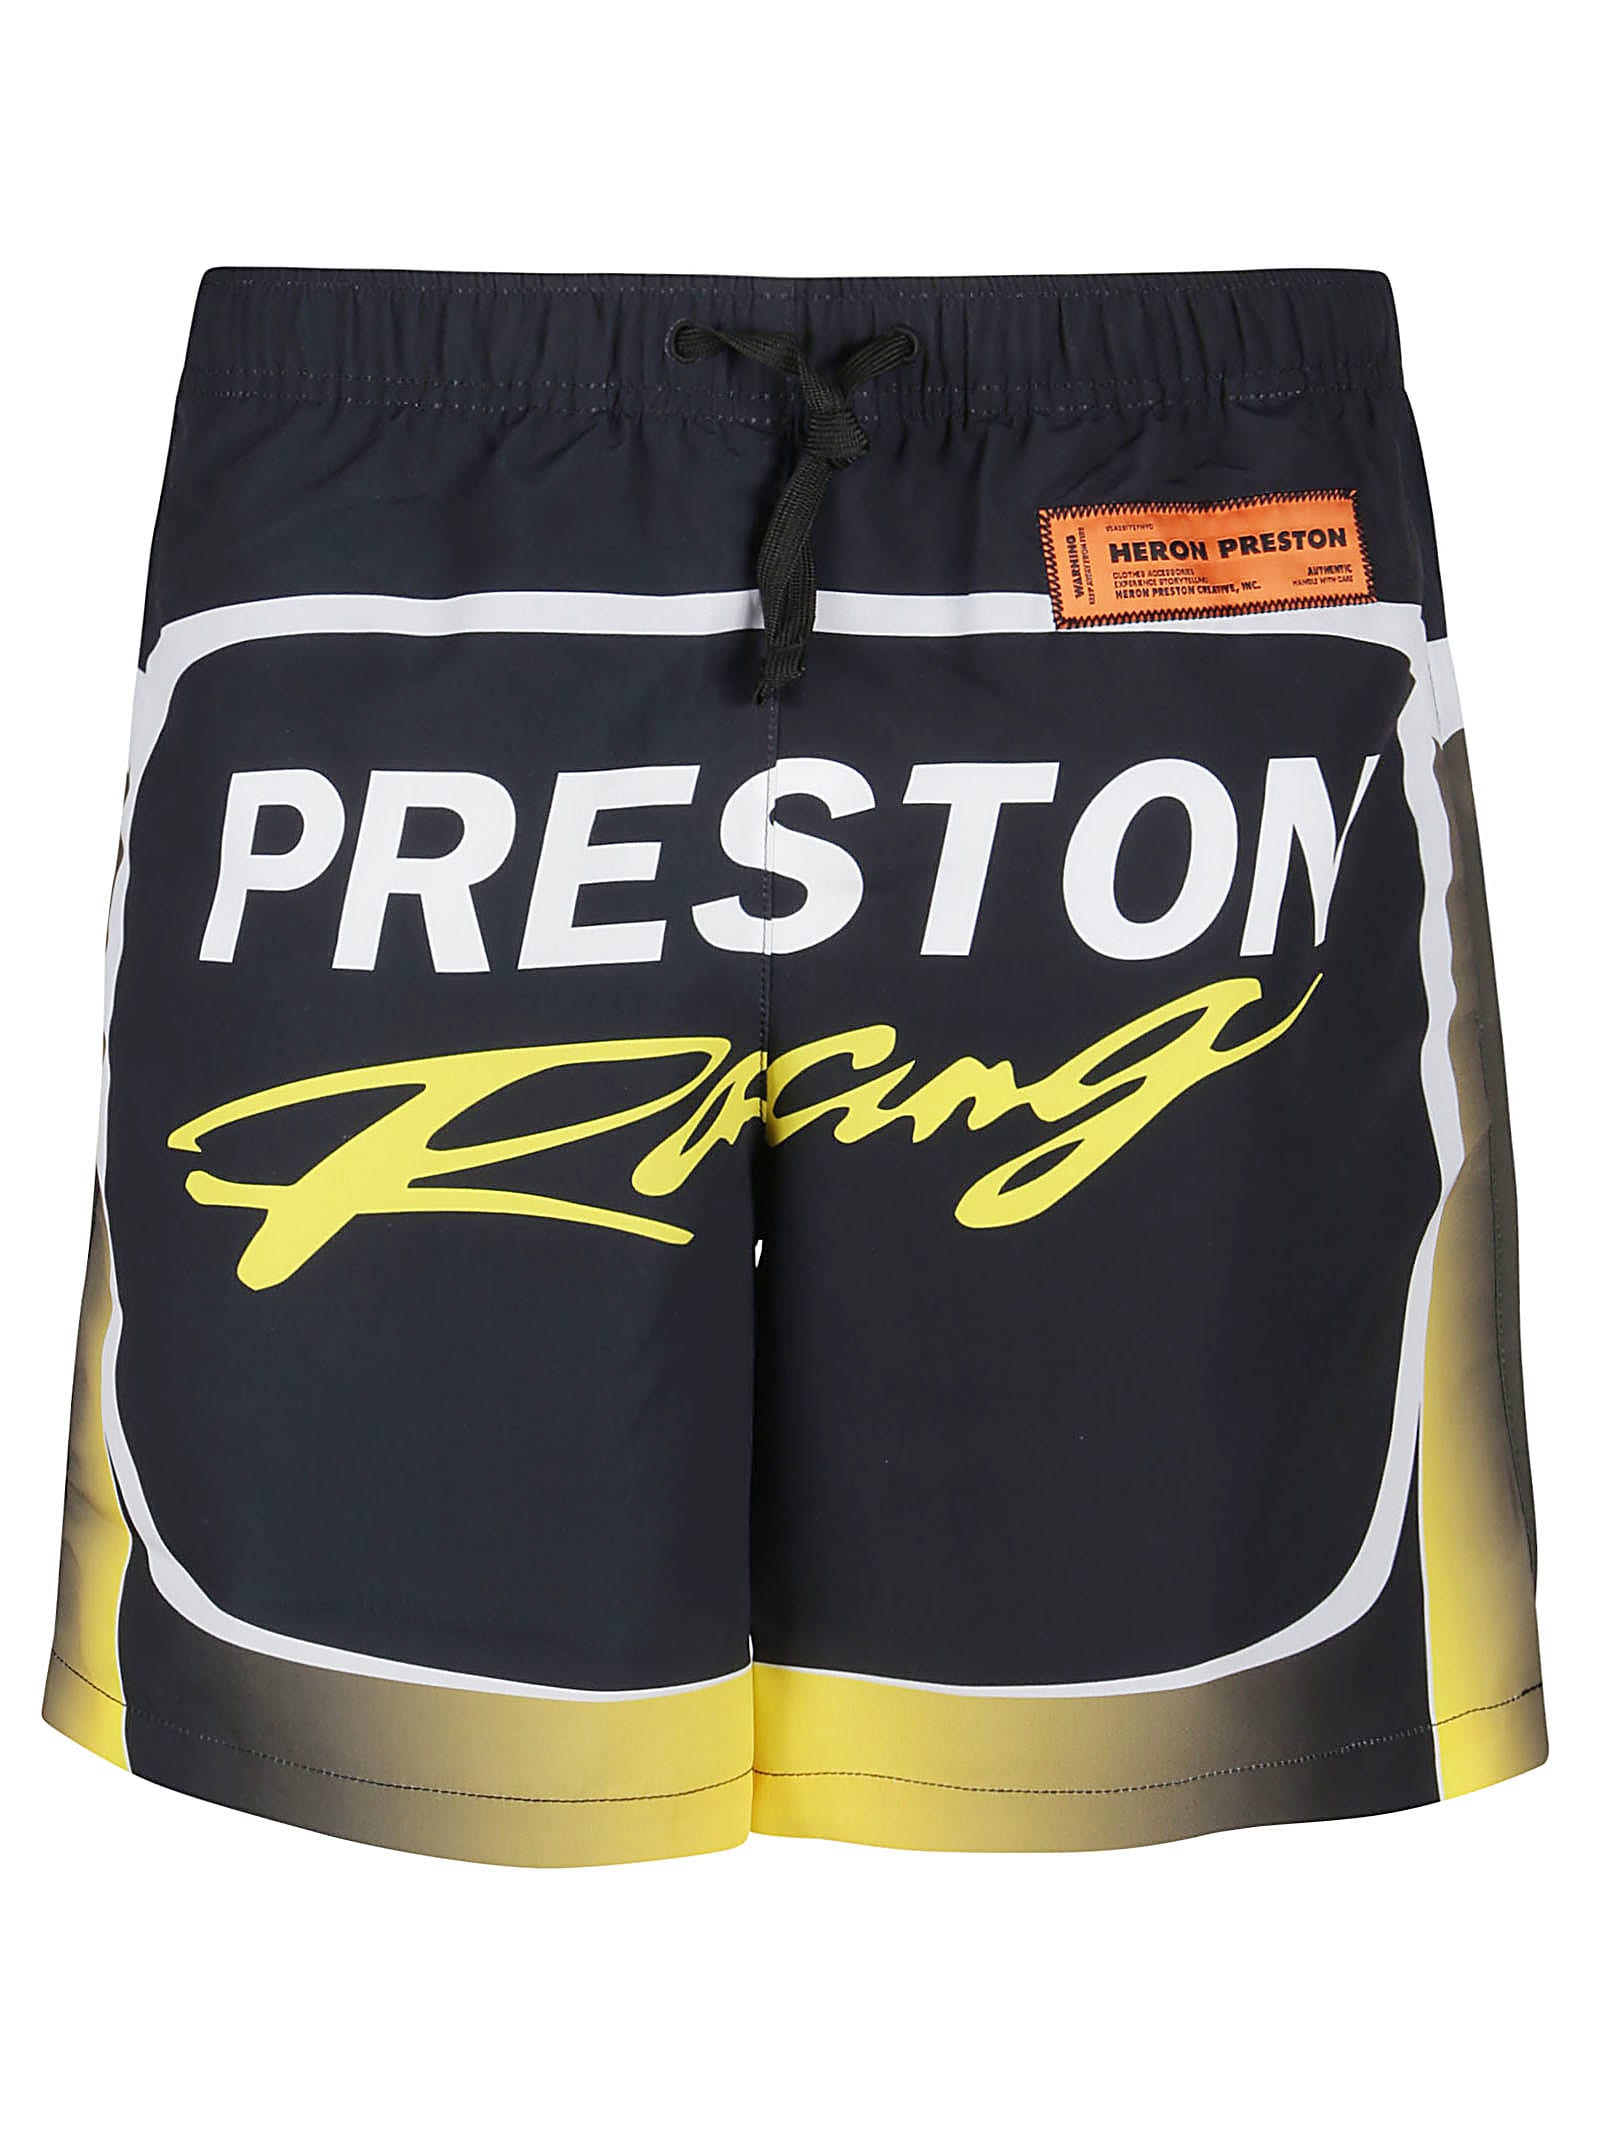 HERON PRESTON Preston Racing Dry Fit Short